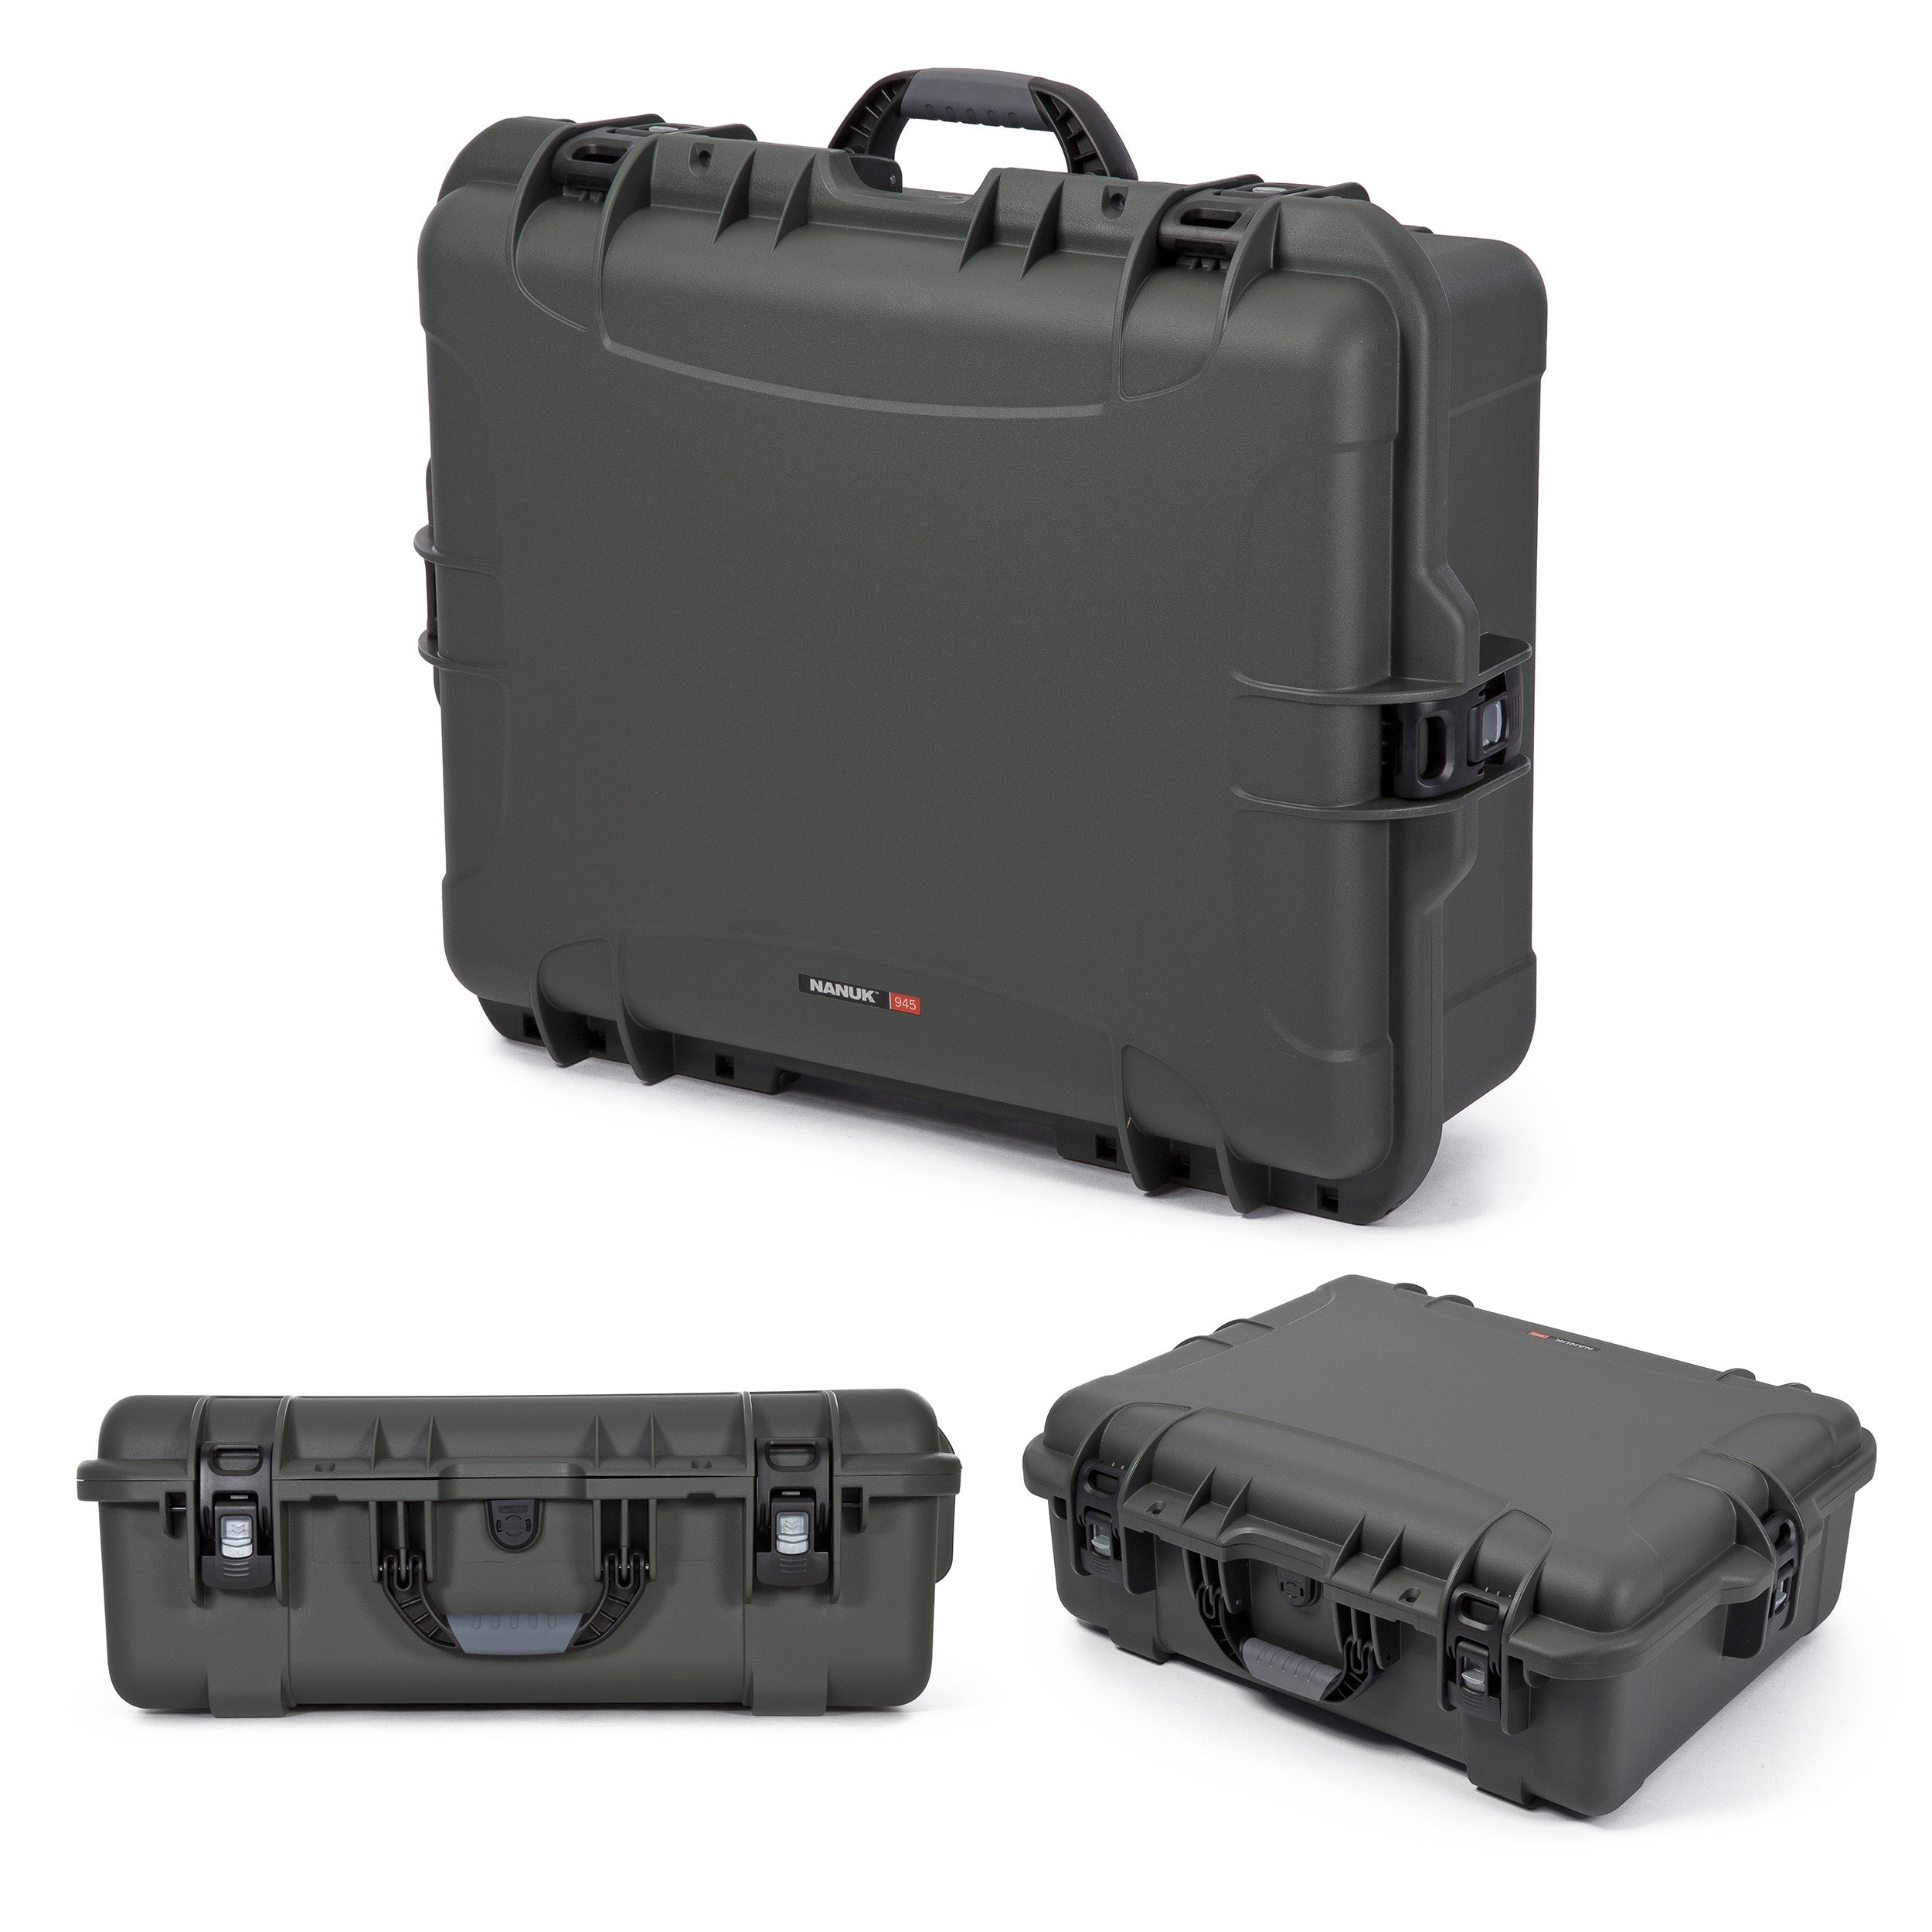 Nanuk 945-DJI46 Waterproof Hard Drone Case with Custom Foam Insert for DJI Phantom 4/ Phantom 4 Pro (Pro+) / Advanced (Advanced+) & Phantom 3 - Olive